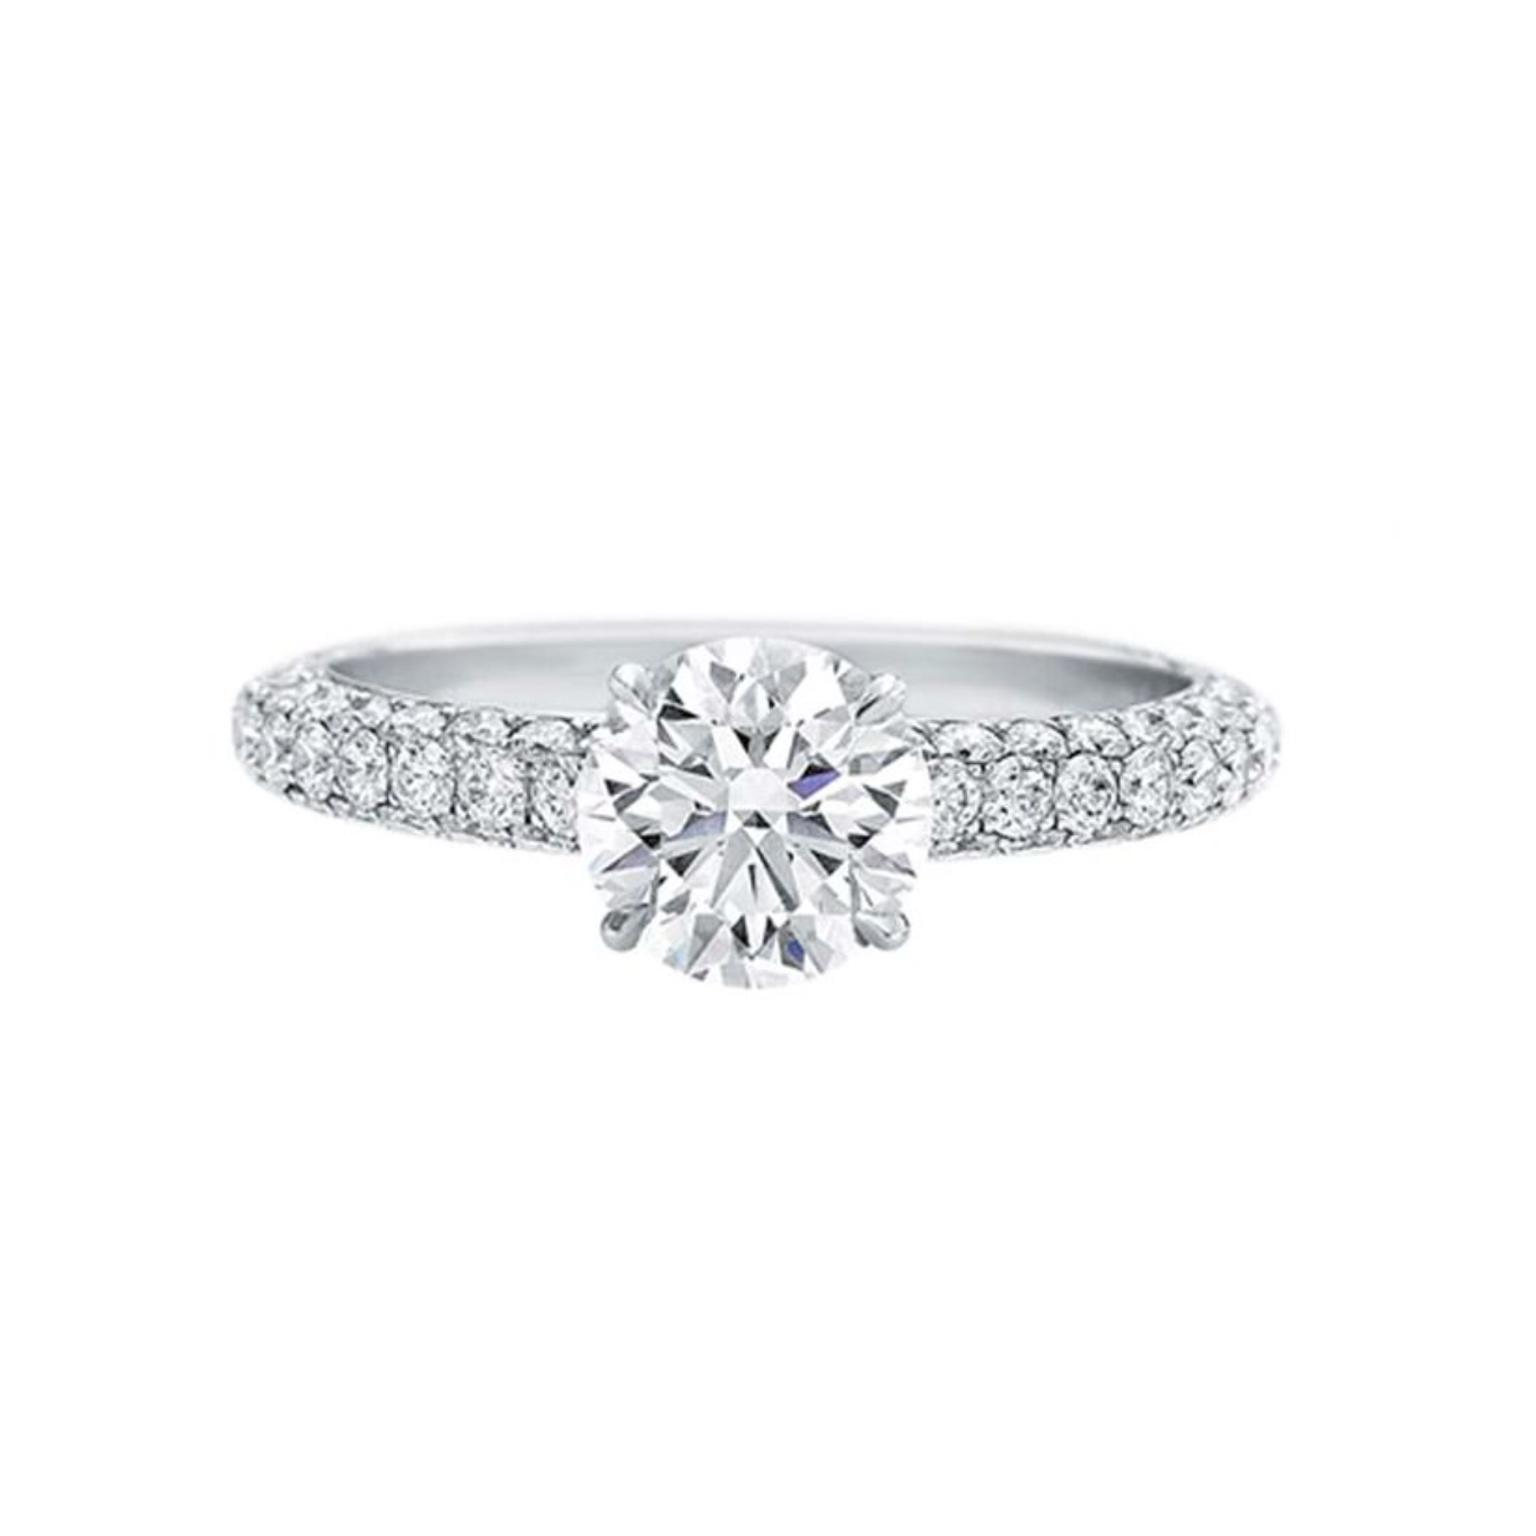 Harry Winston attraction 1 carat diamond engagement ring